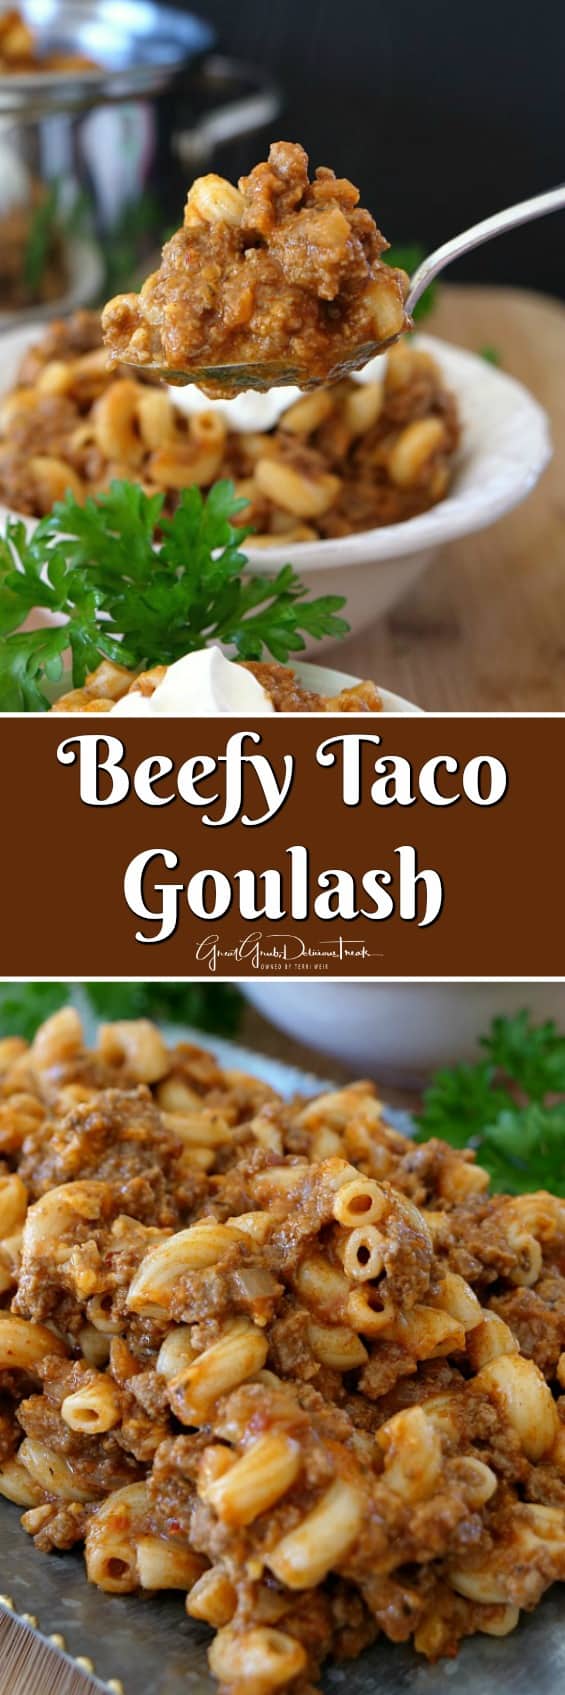 Beefy Taco Goulash